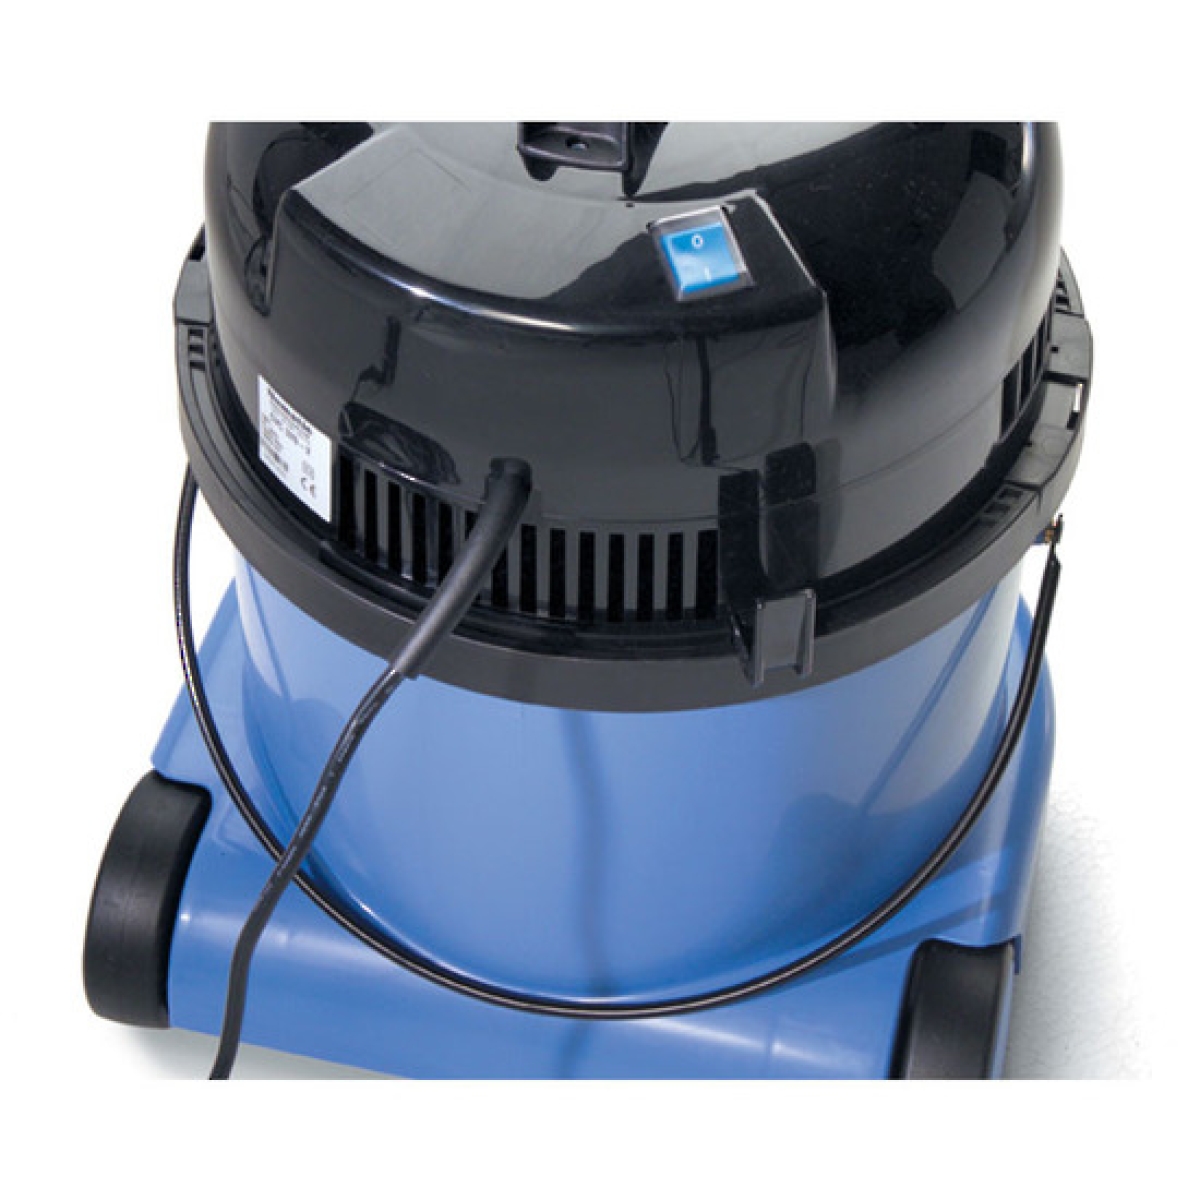 Numatic Charles Wet & Dry Vacuum Cleaner 15L CVC370-2